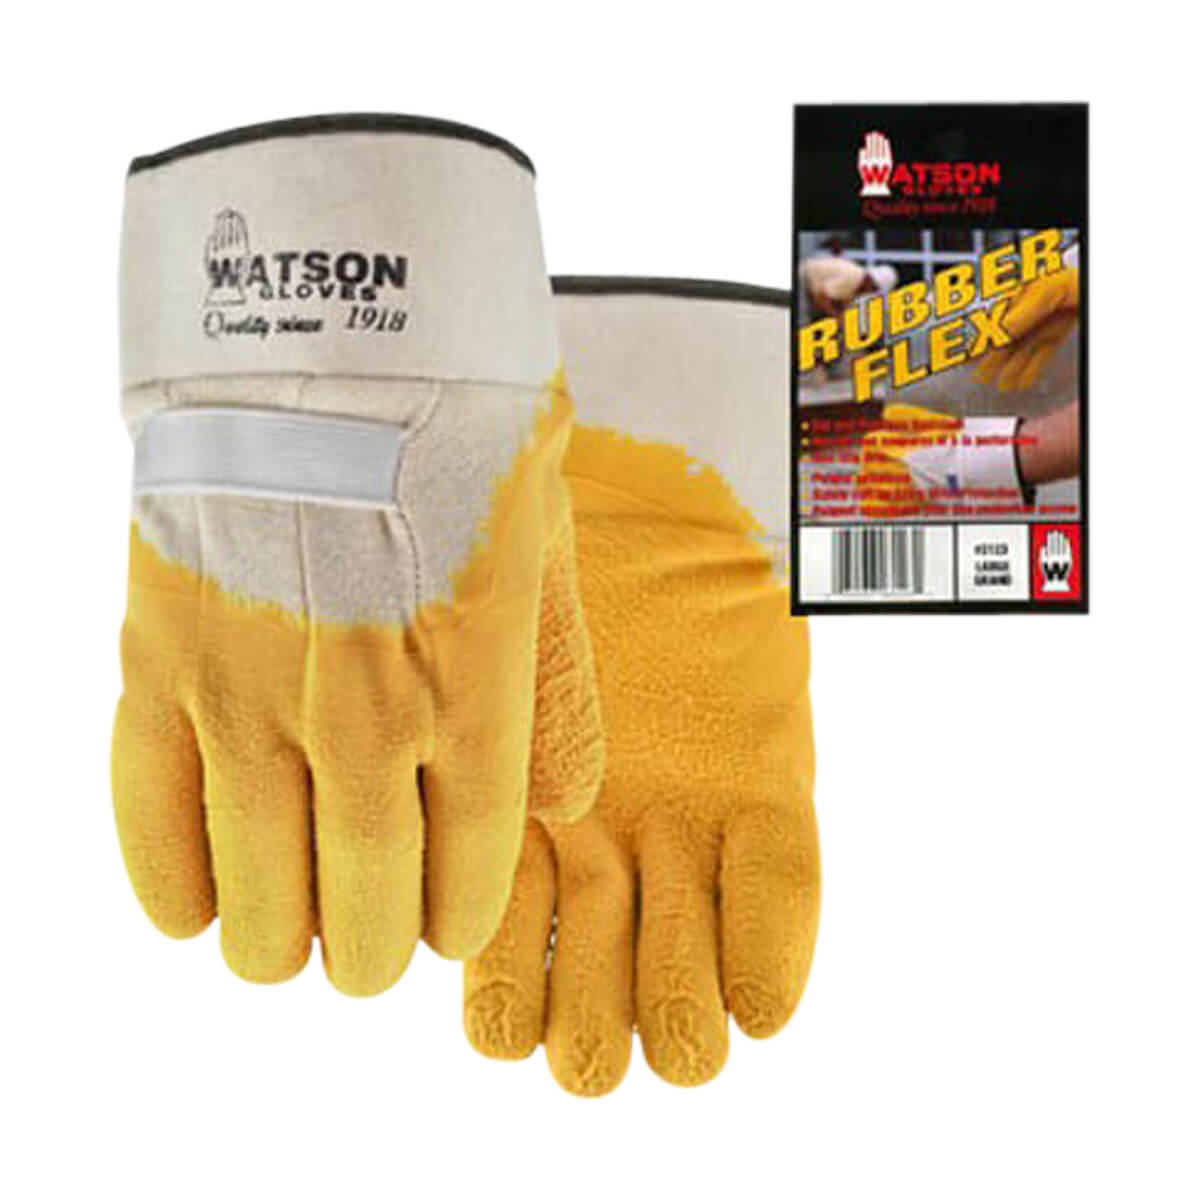 Foamtastic Gloves